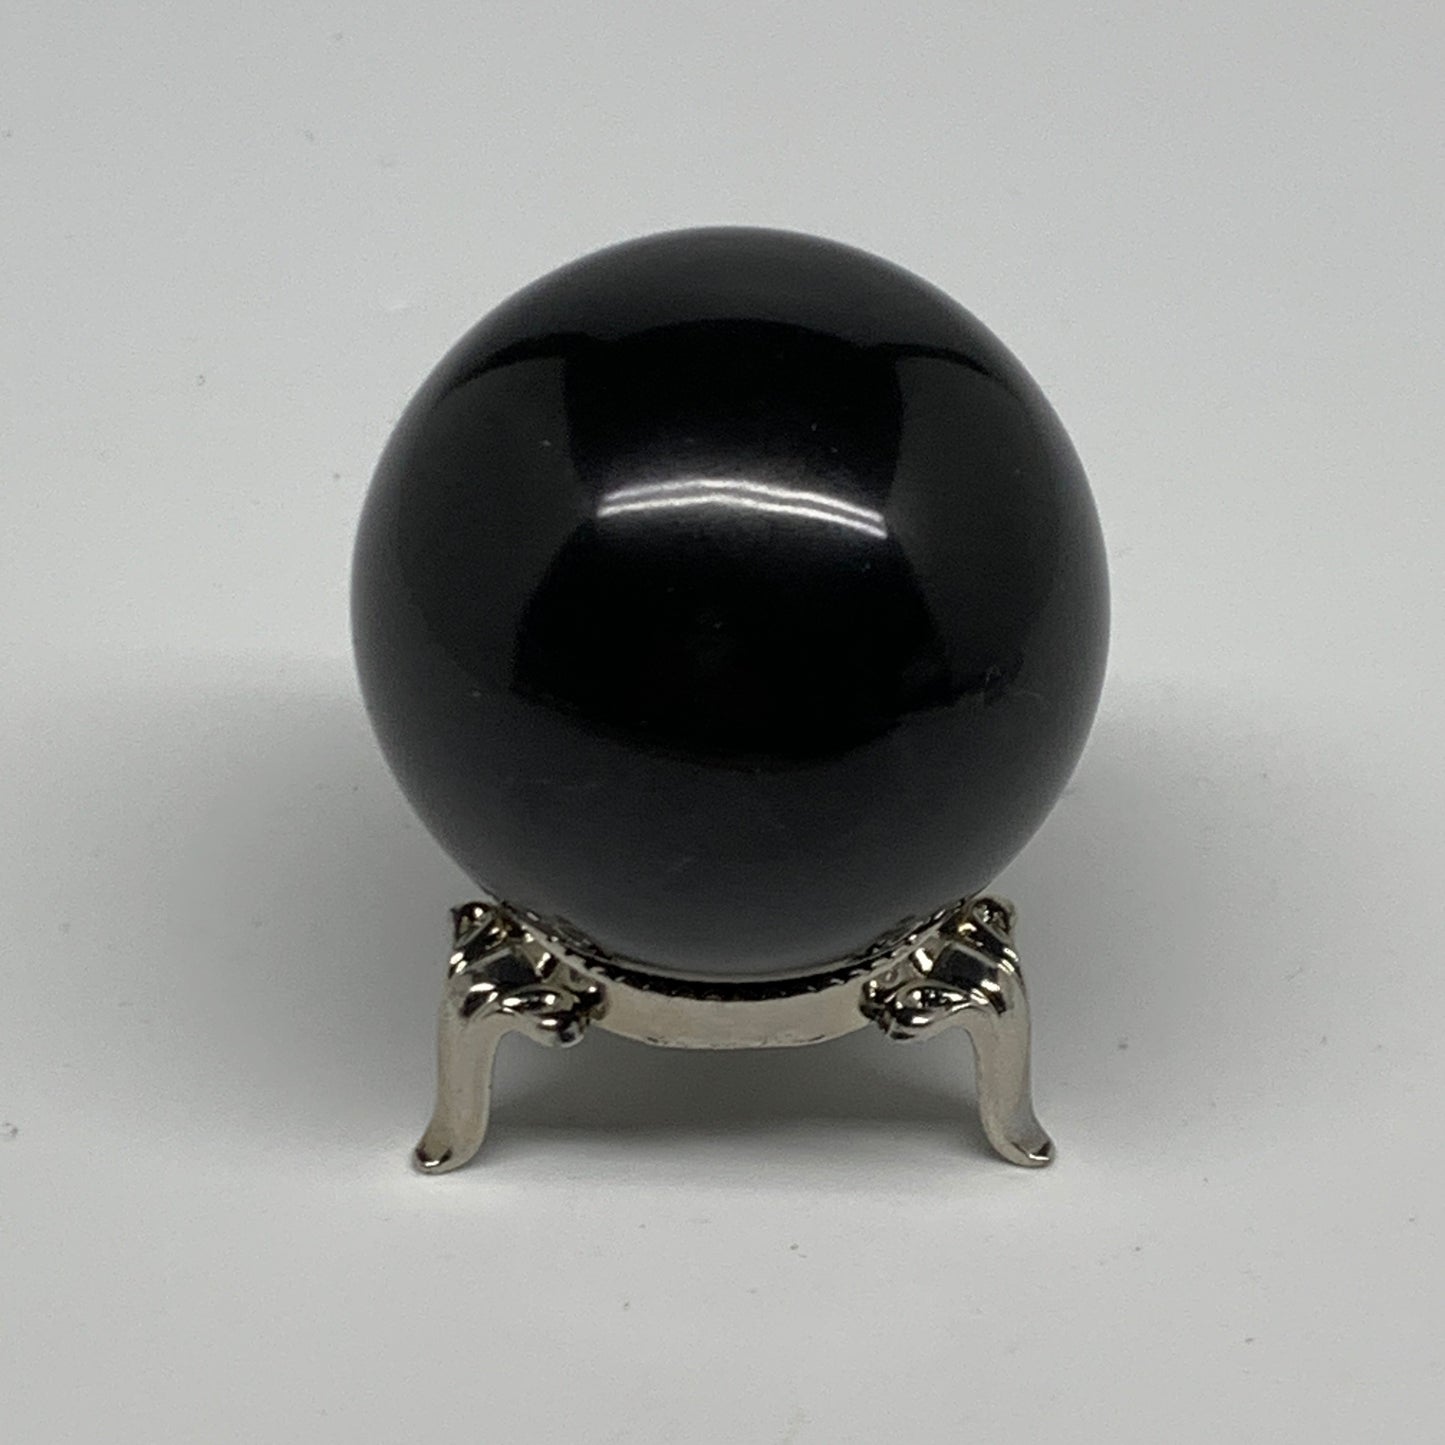 162.8g, 1.9"(47mm), Natural Black Jasper Sphere Ball Gemstone @India, B27916